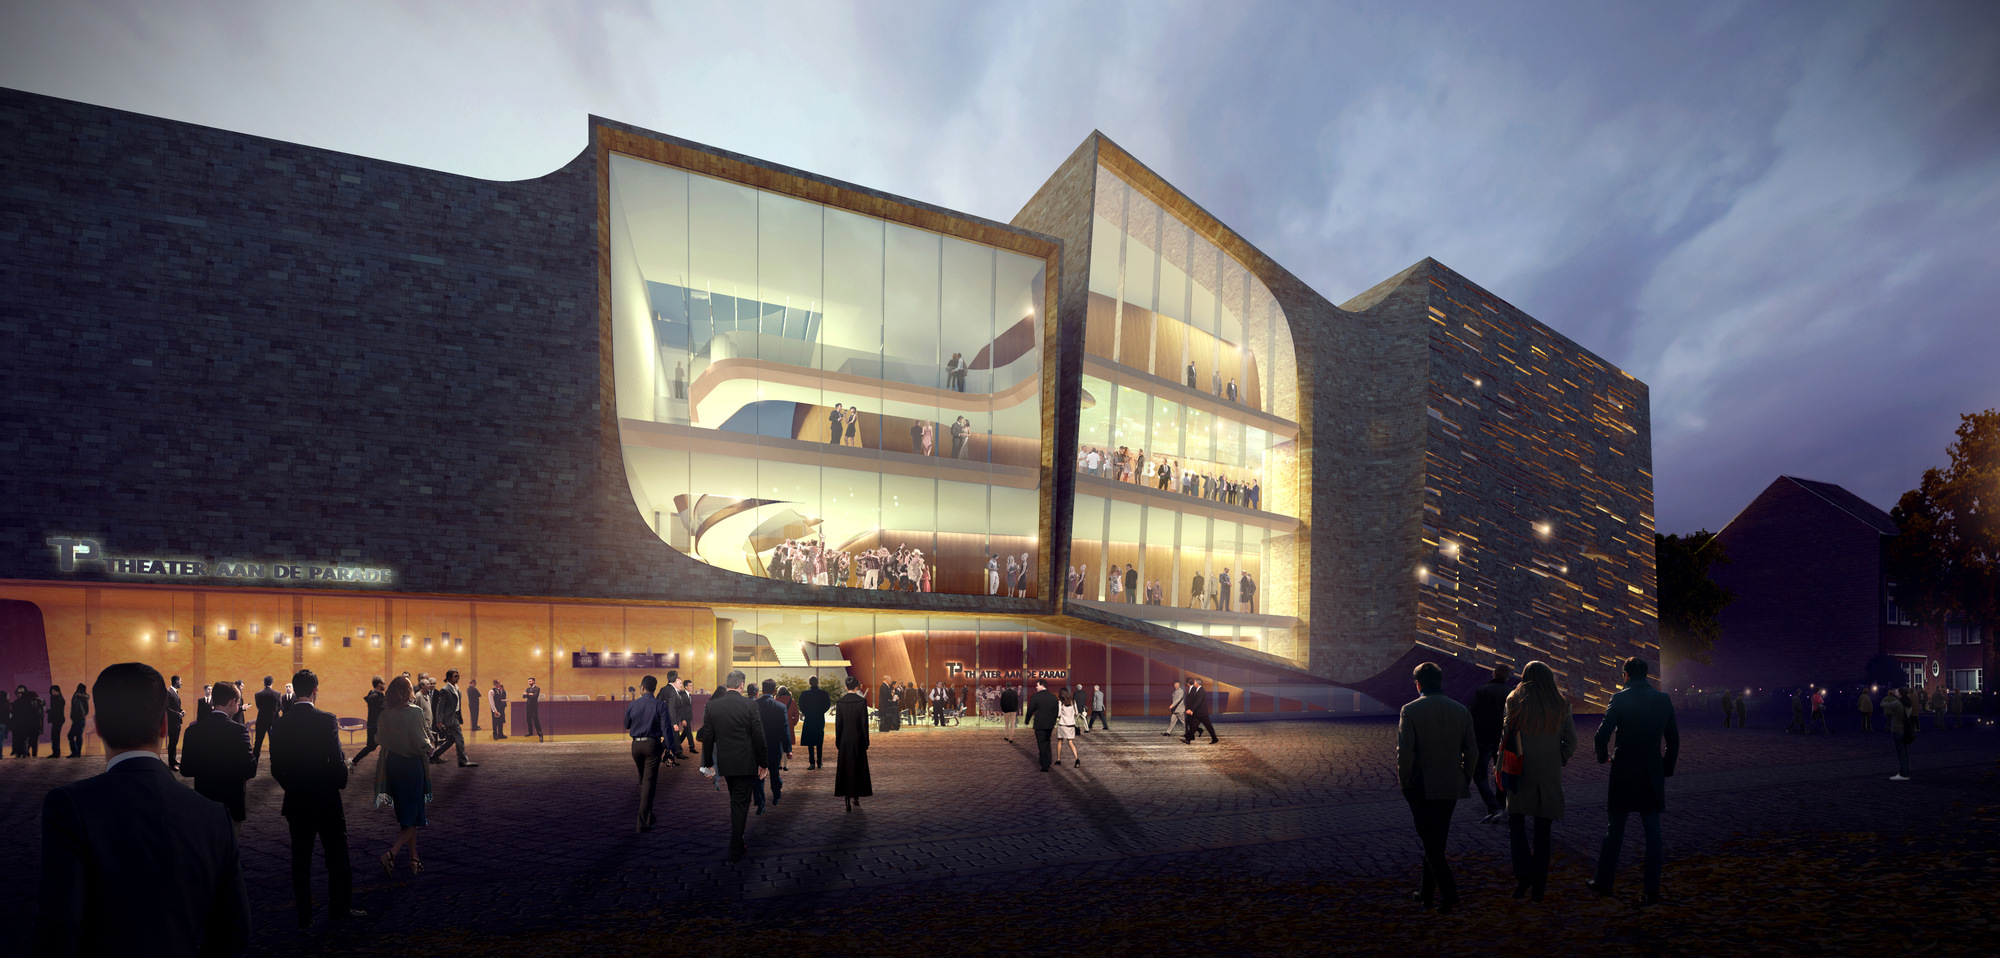 UNStudio’s design for the Theater aan de Parade in 's-Hertogenbosch selected as one of two finalists